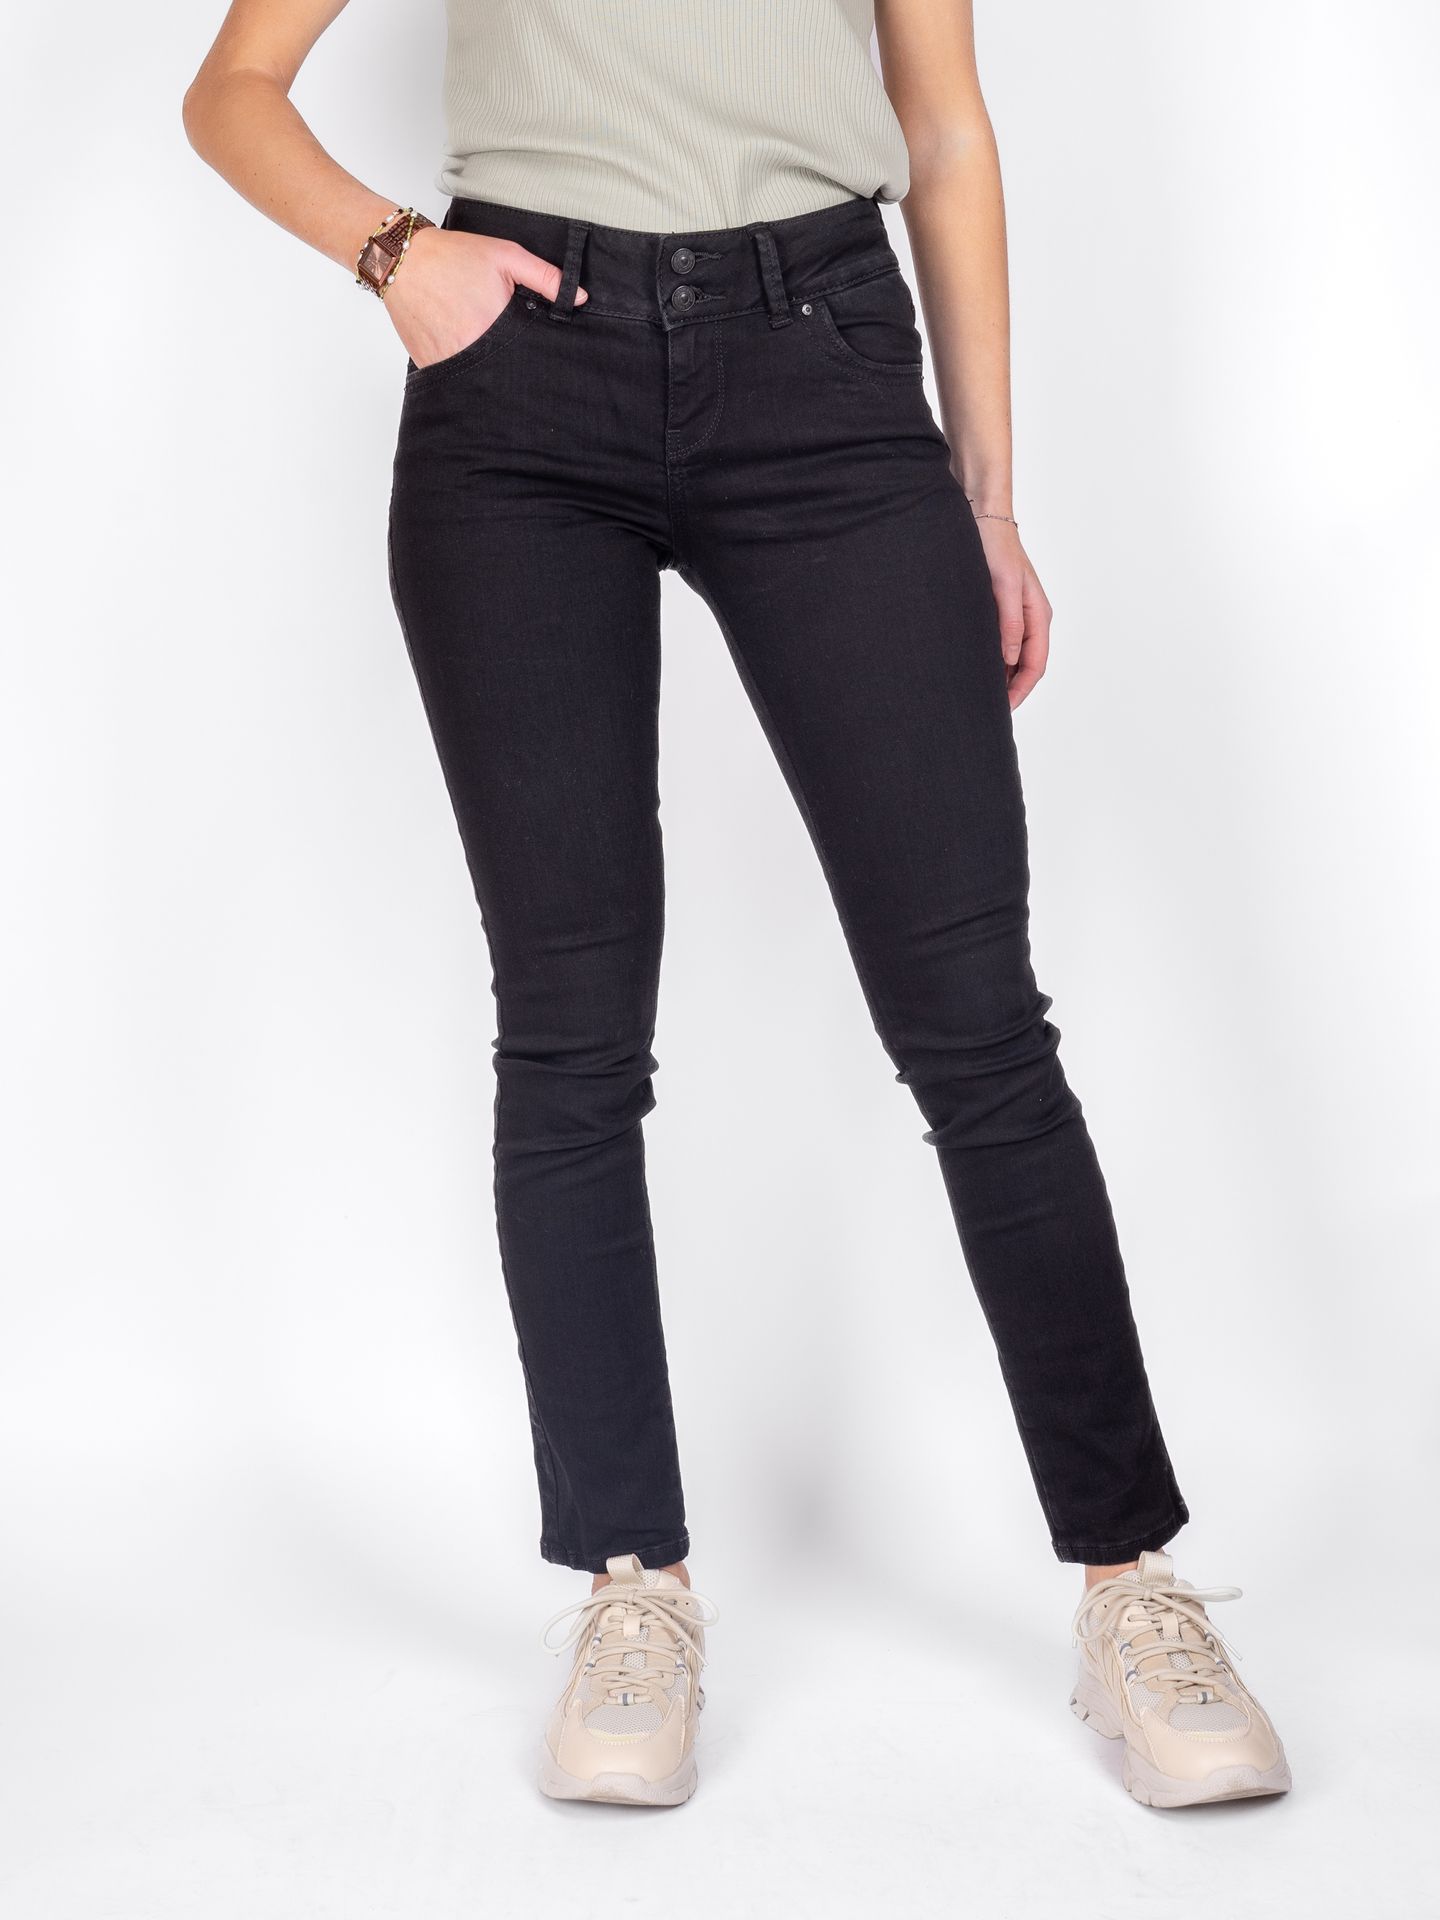 Ltb jeans Molly Hw Black to Black 4796 Zwart 2900114842641